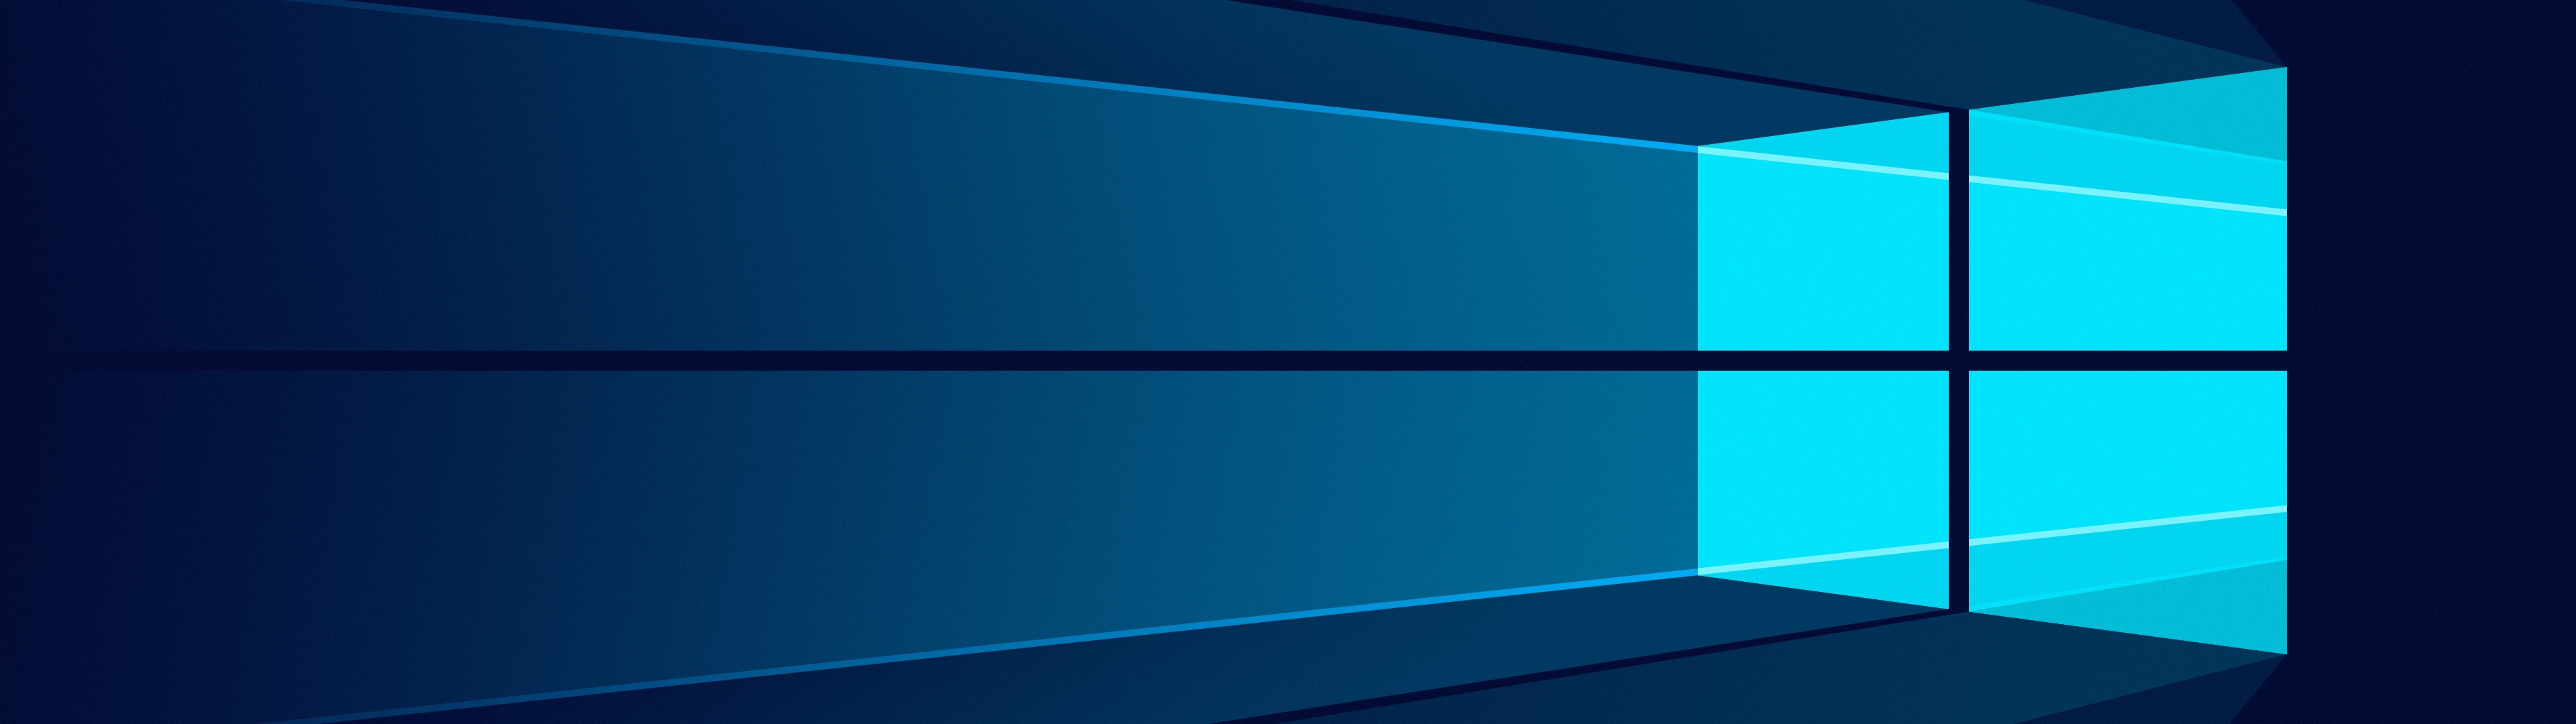 Windows 10 Wallpaper 4k Microsoft Windows Minimalist Blue Background Technology 1557